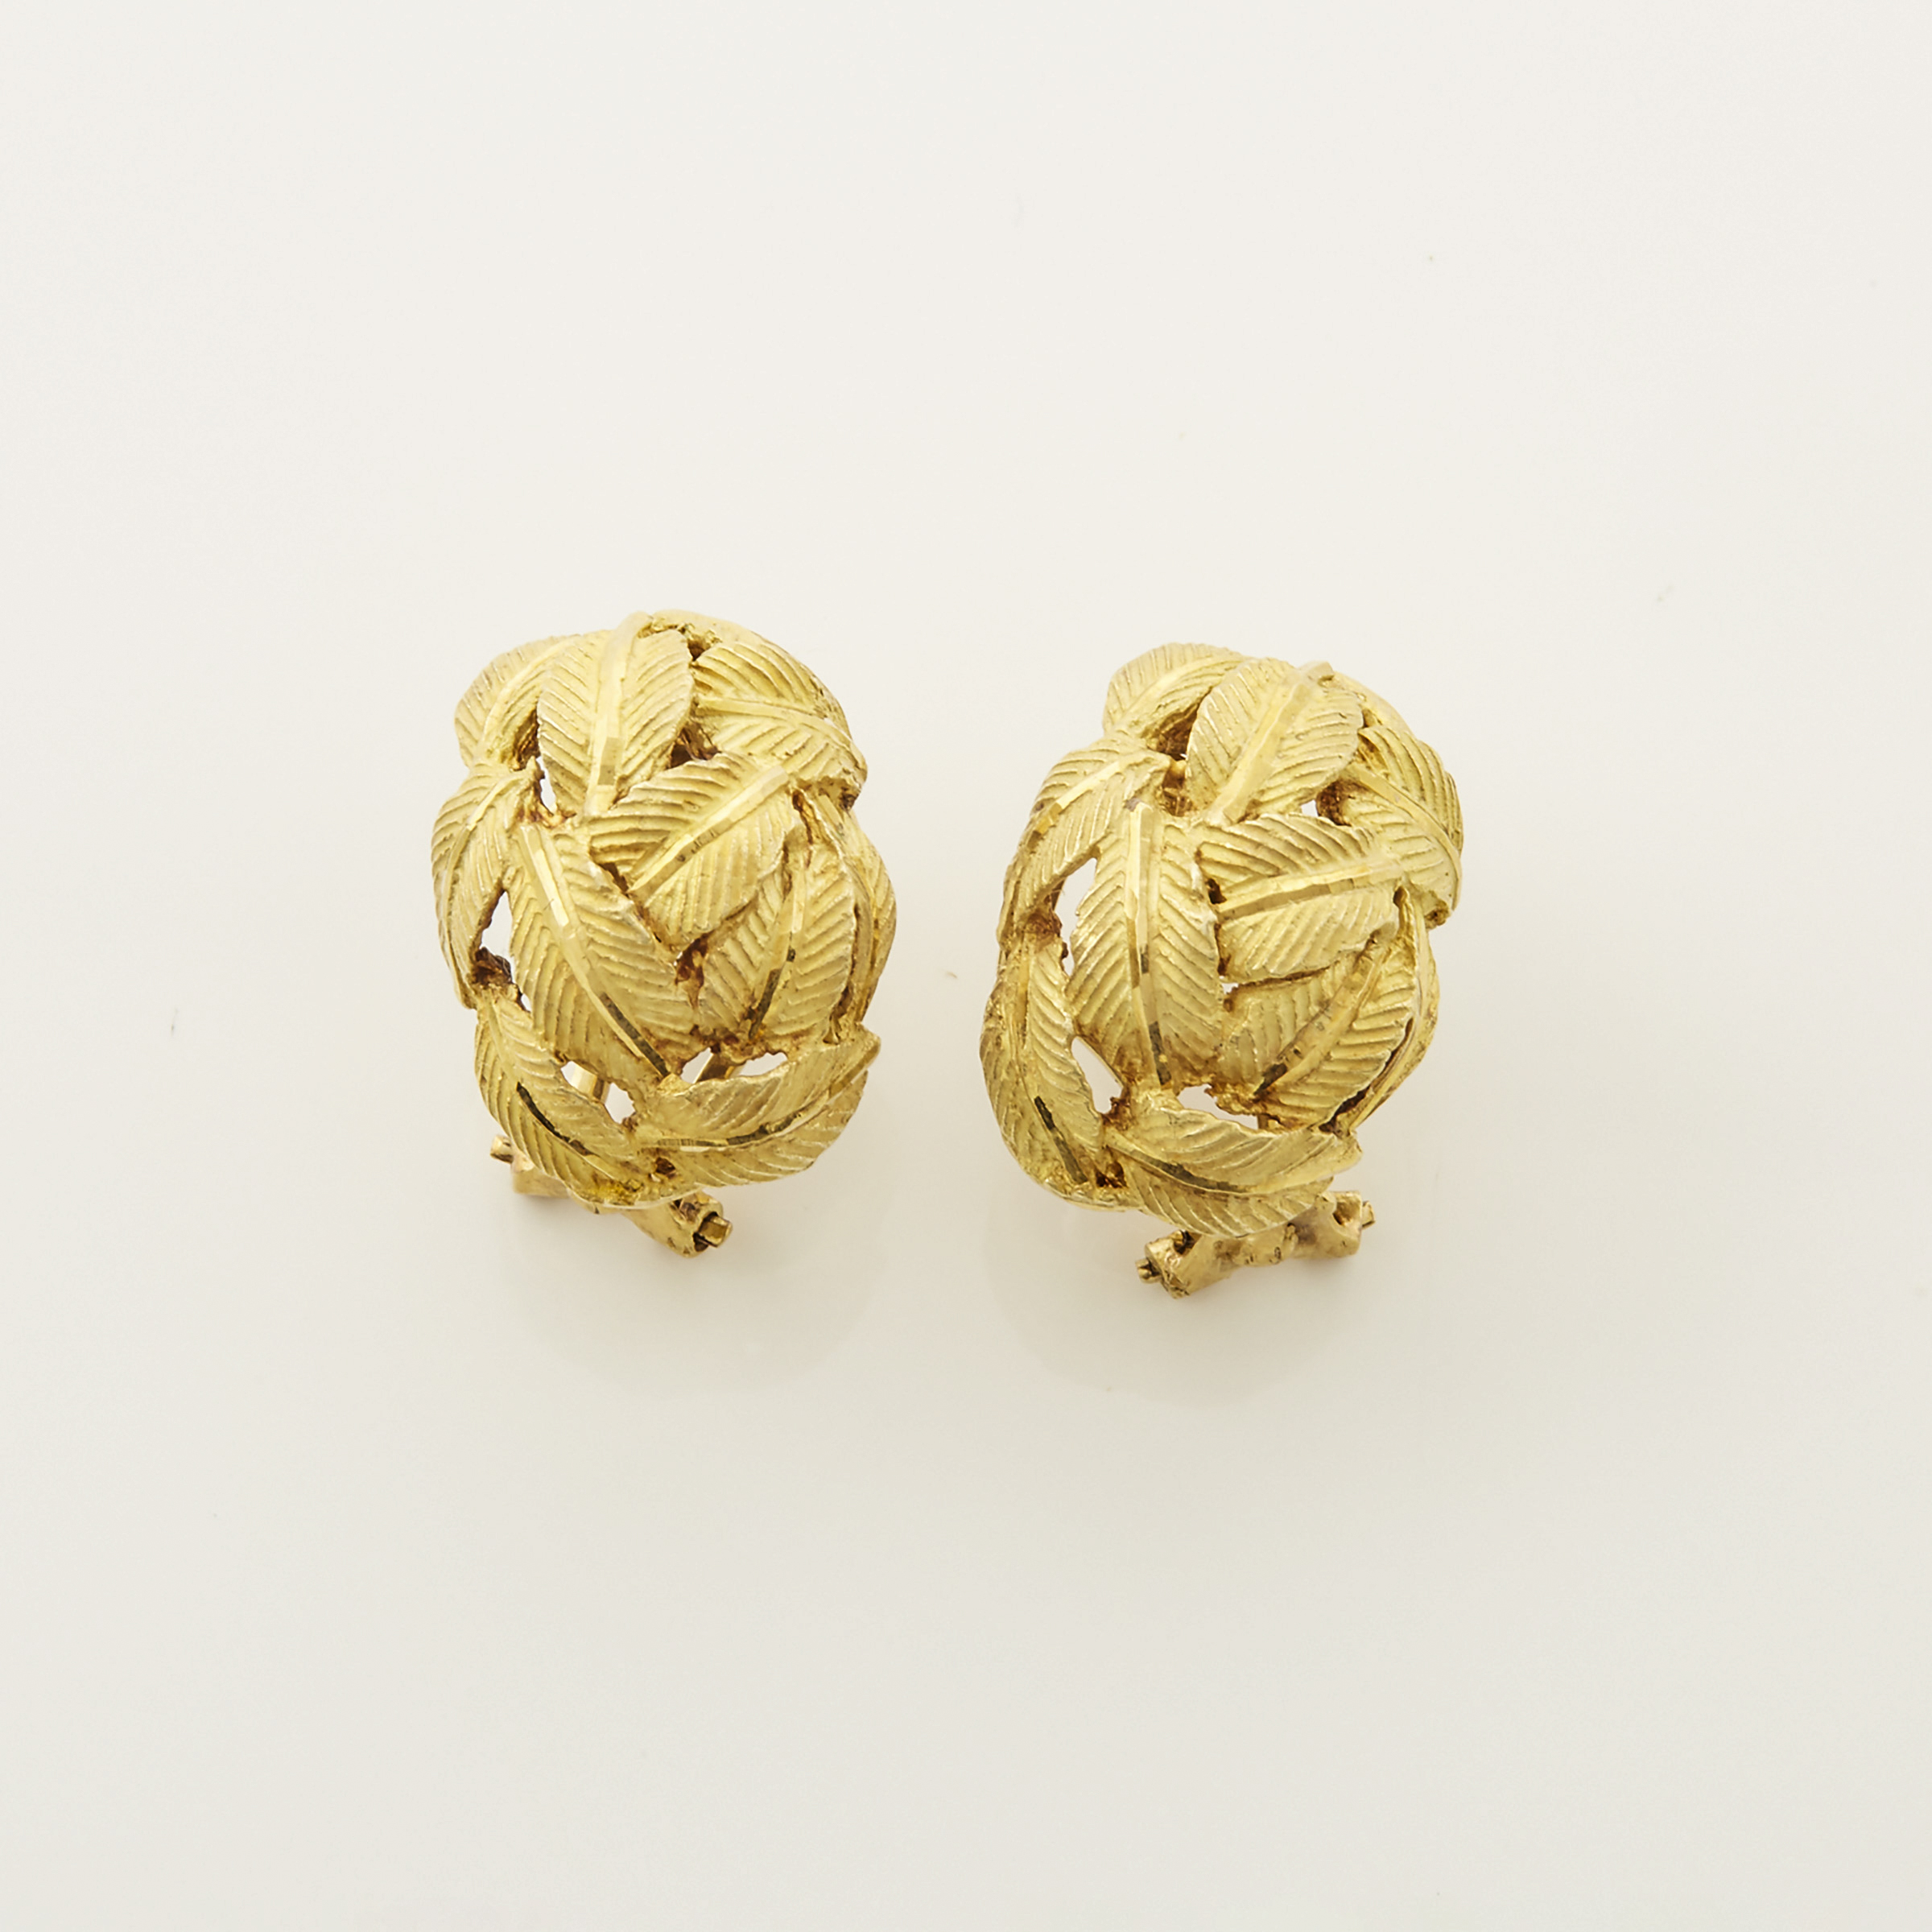 Pair of Birks 14k Yellow Gold Earrings